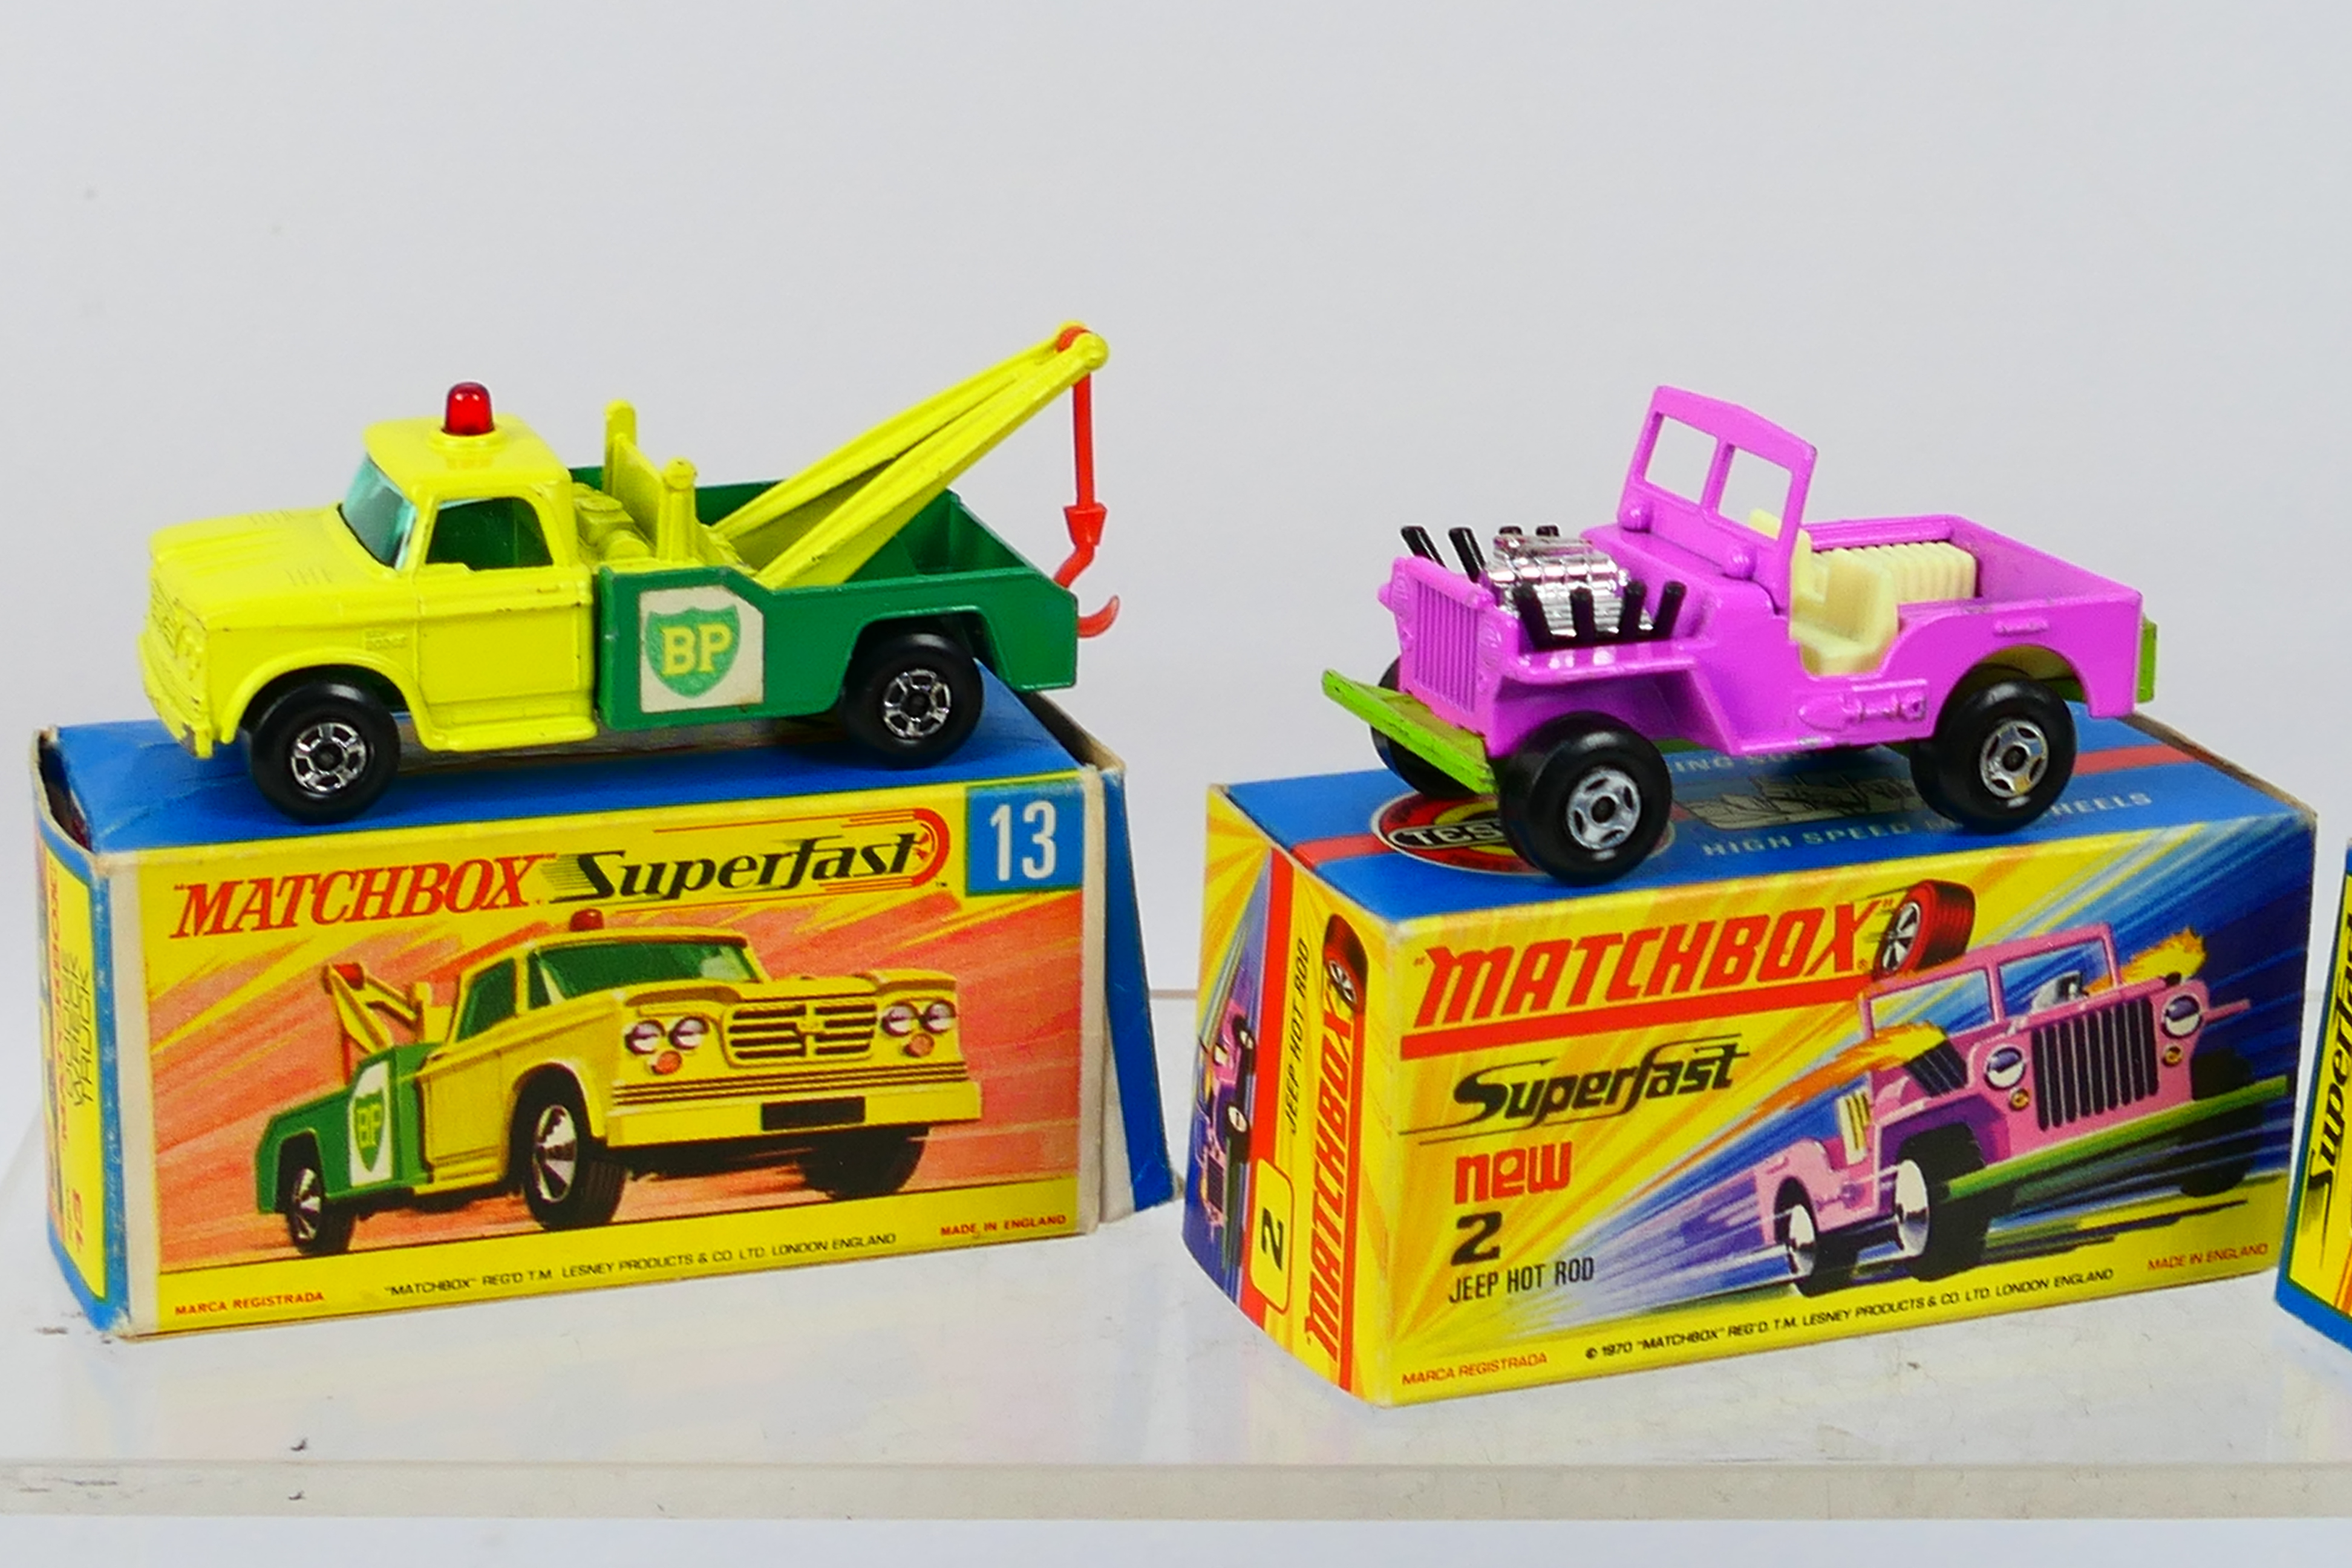 Matchbox - Superfast - 5 x boxed models, Jeep Hot Rod # 2, Land Rover Safari # 12, - Image 2 of 6